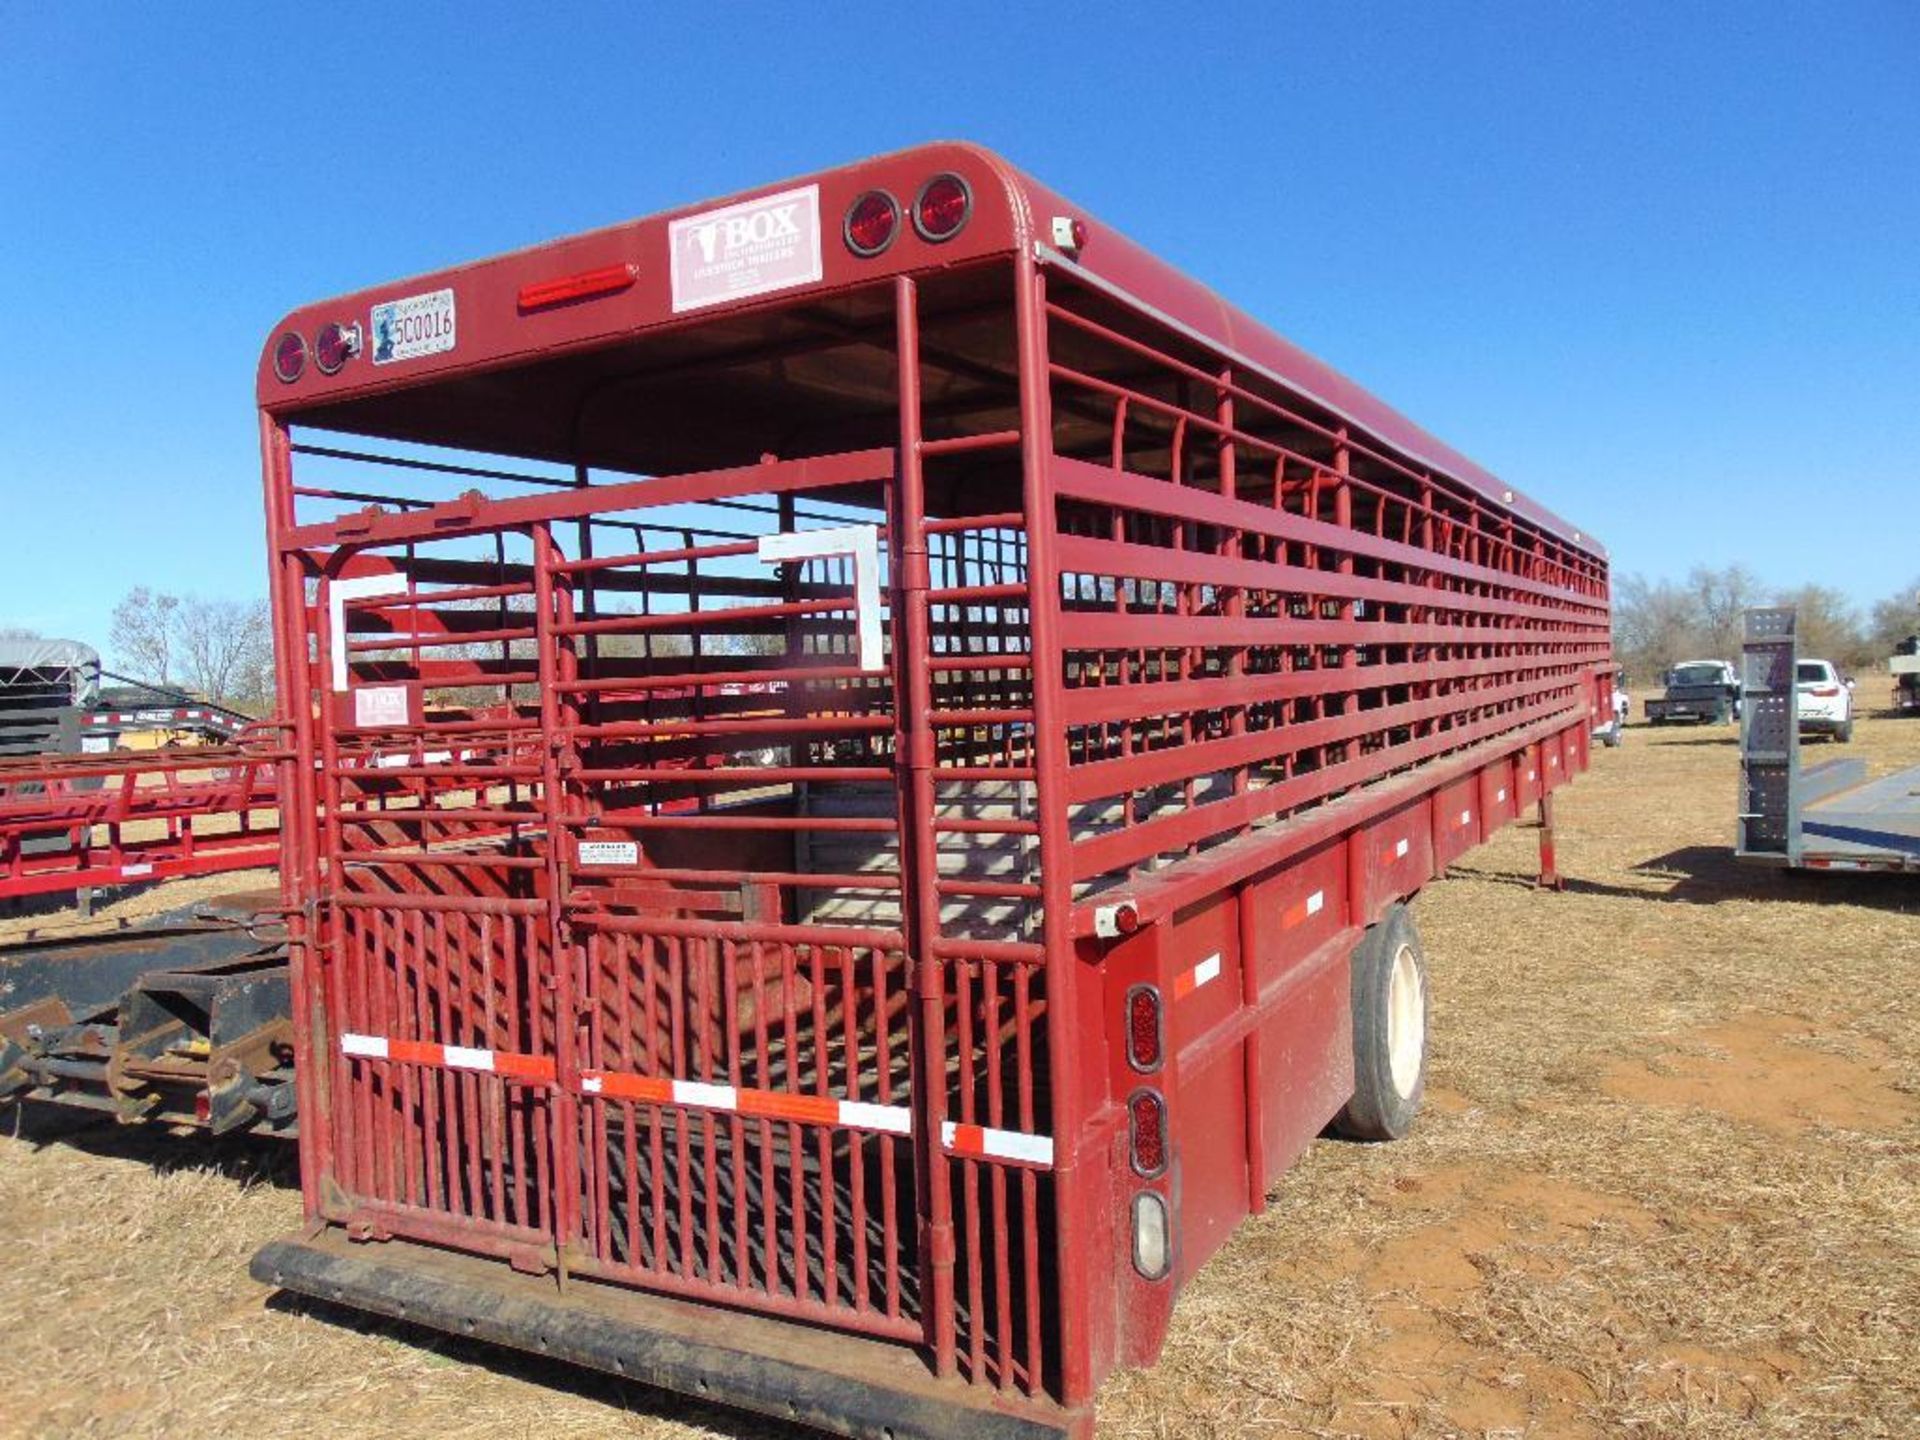 2007 Gooseneck S/A 43' Ground Load Livestock Trailer, s/n 16gs743147b060888, 3 cut gates, sliding - Image 5 of 6